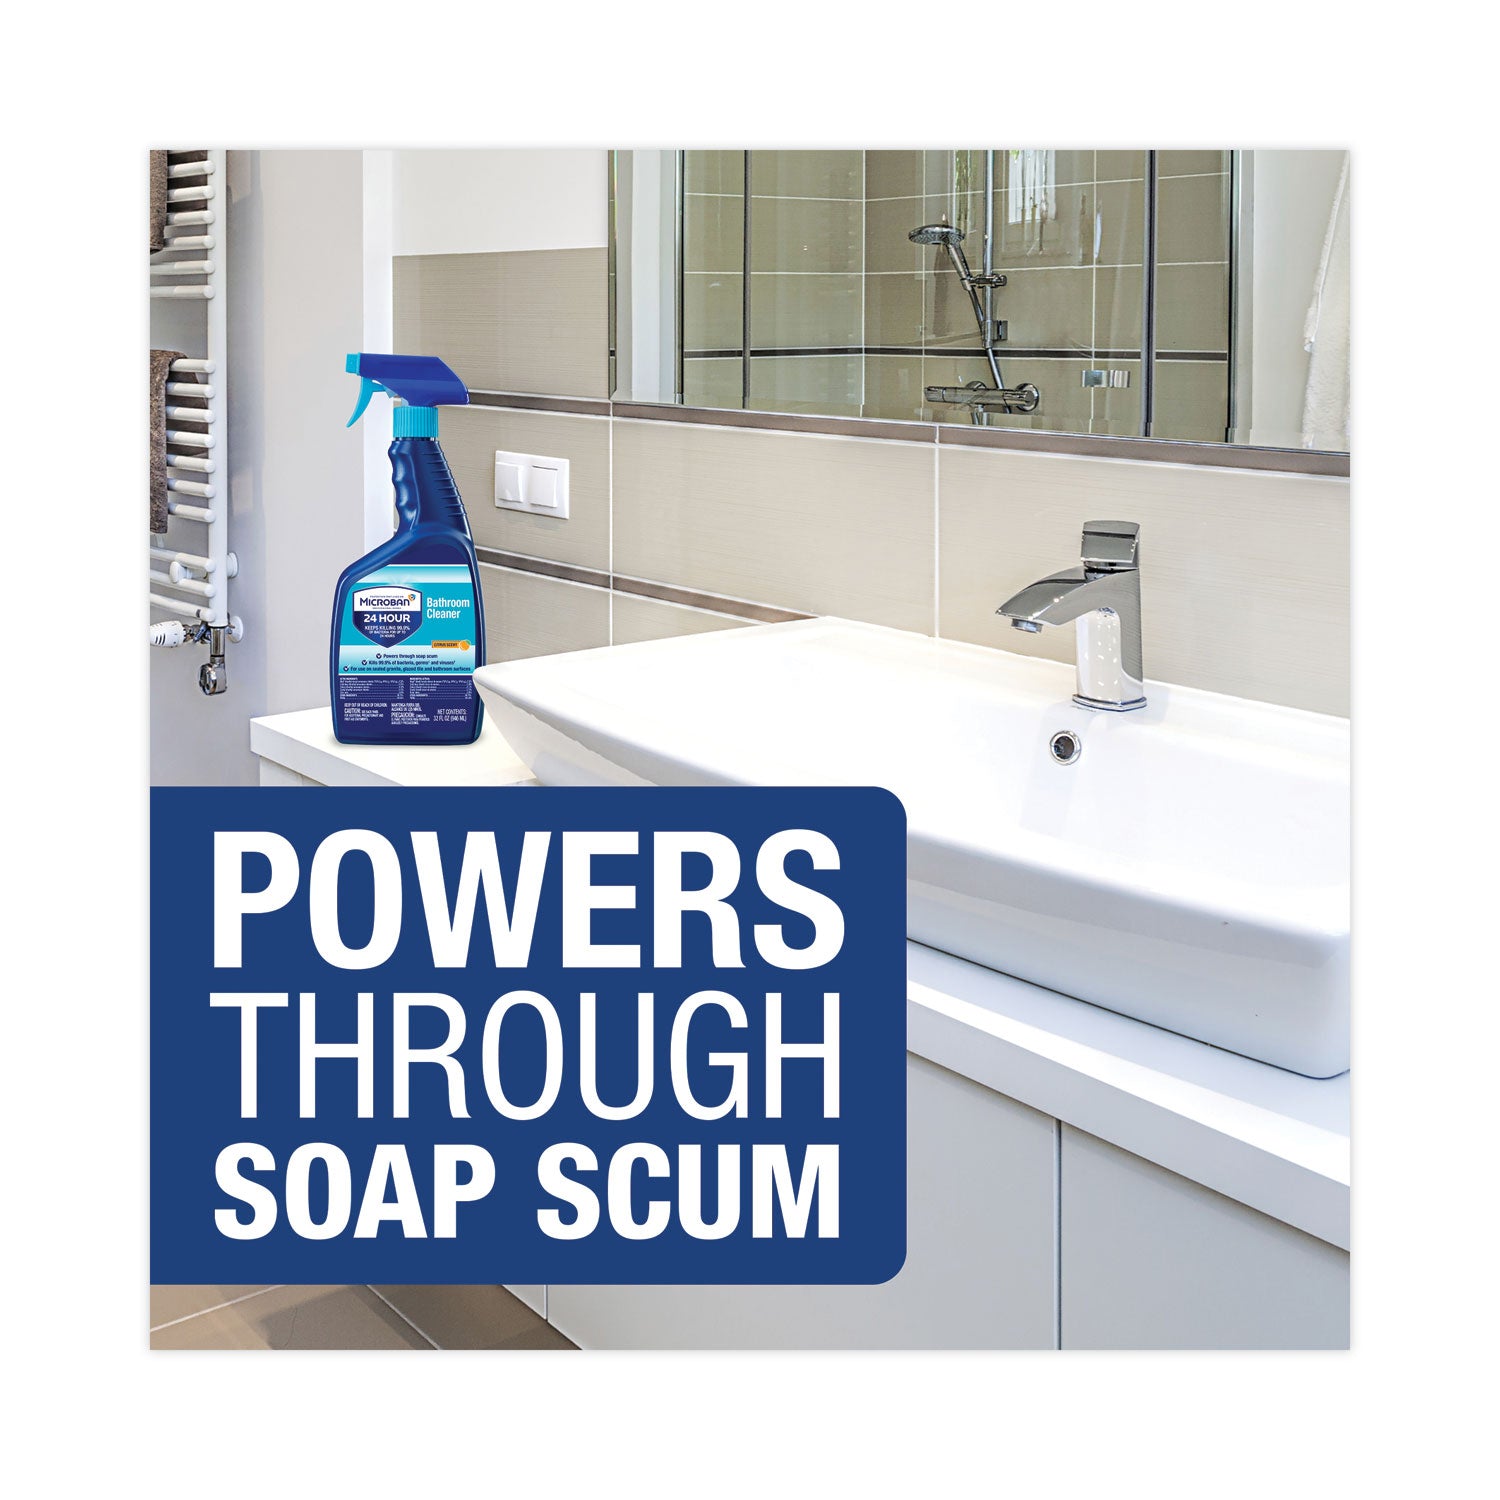 24-hour-disinfectant-bathroom-cleaner-citrus-32-oz-spray-bottle-6-carton_pgc30120 - 7